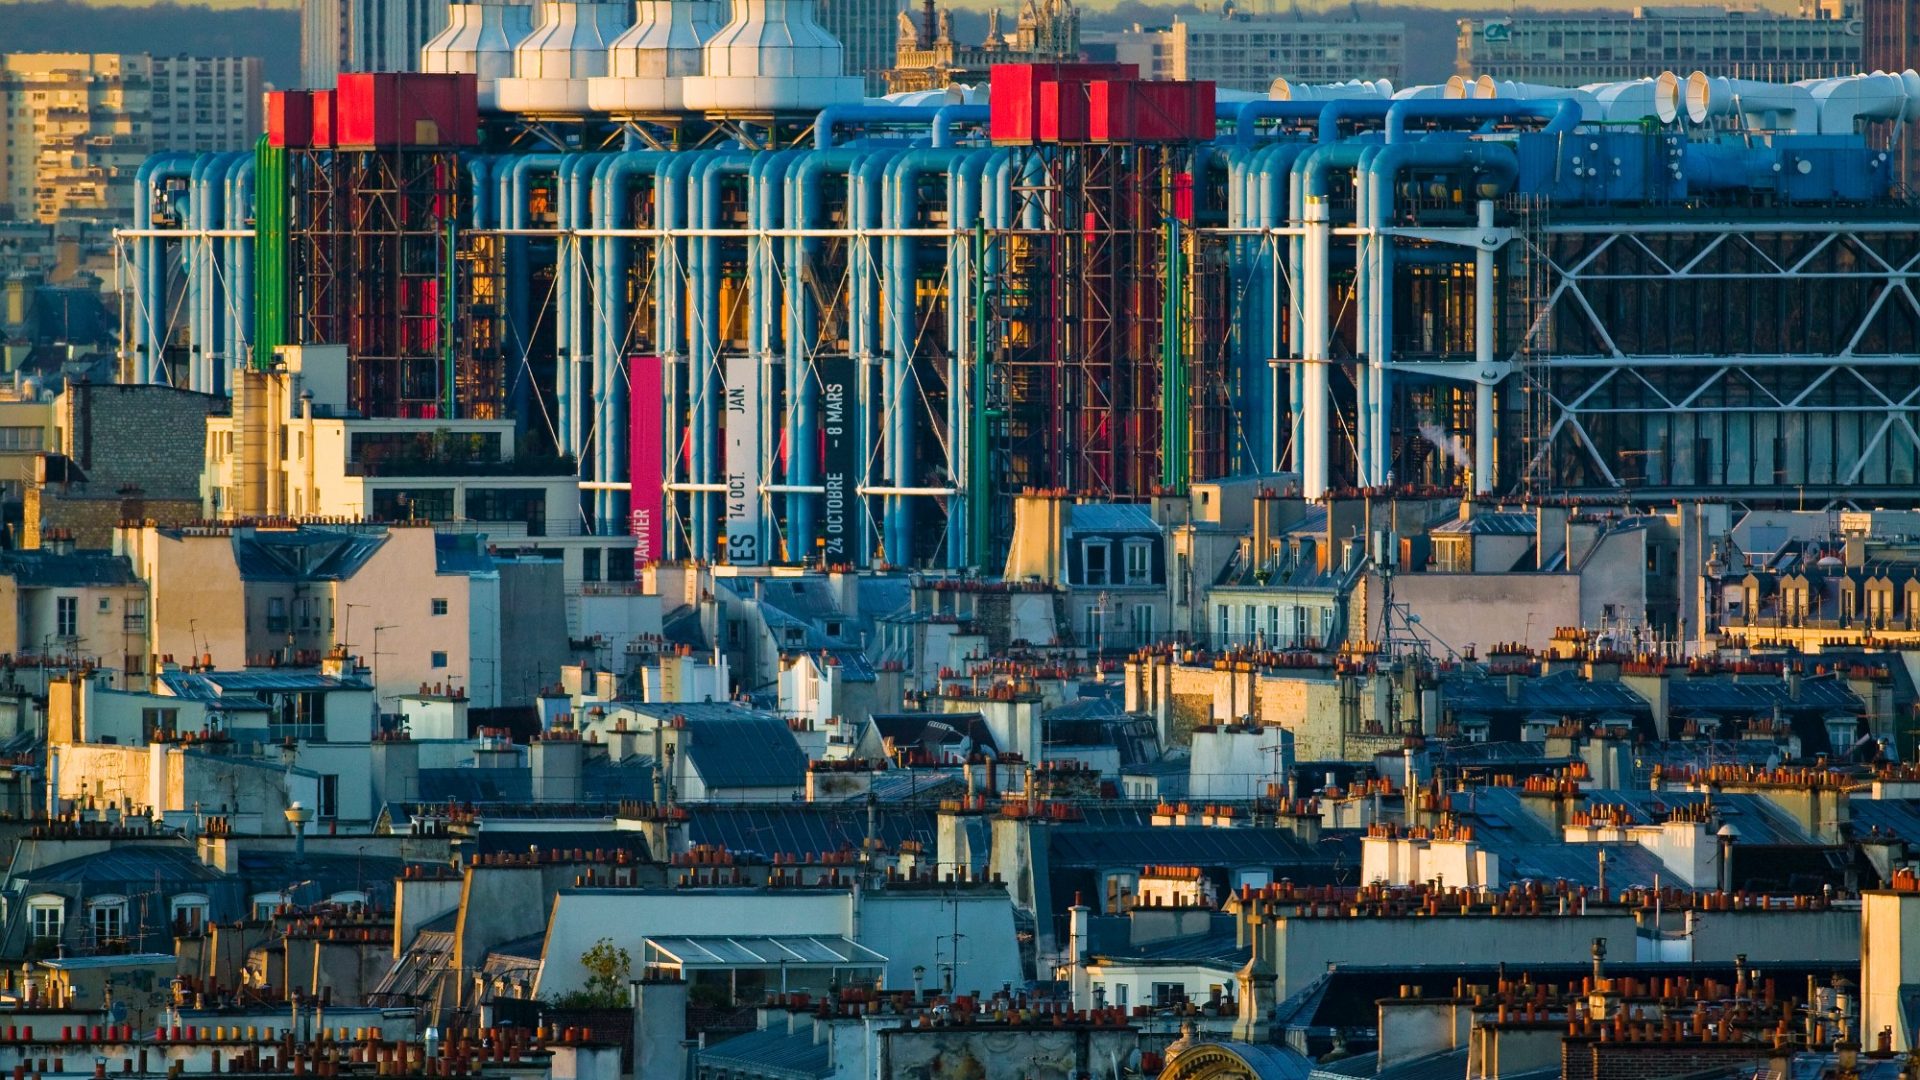 The Centre Pompidou looms over the roofs of the Marais district of Paris. Photo: Yann Guichaoua-Photos/Getty